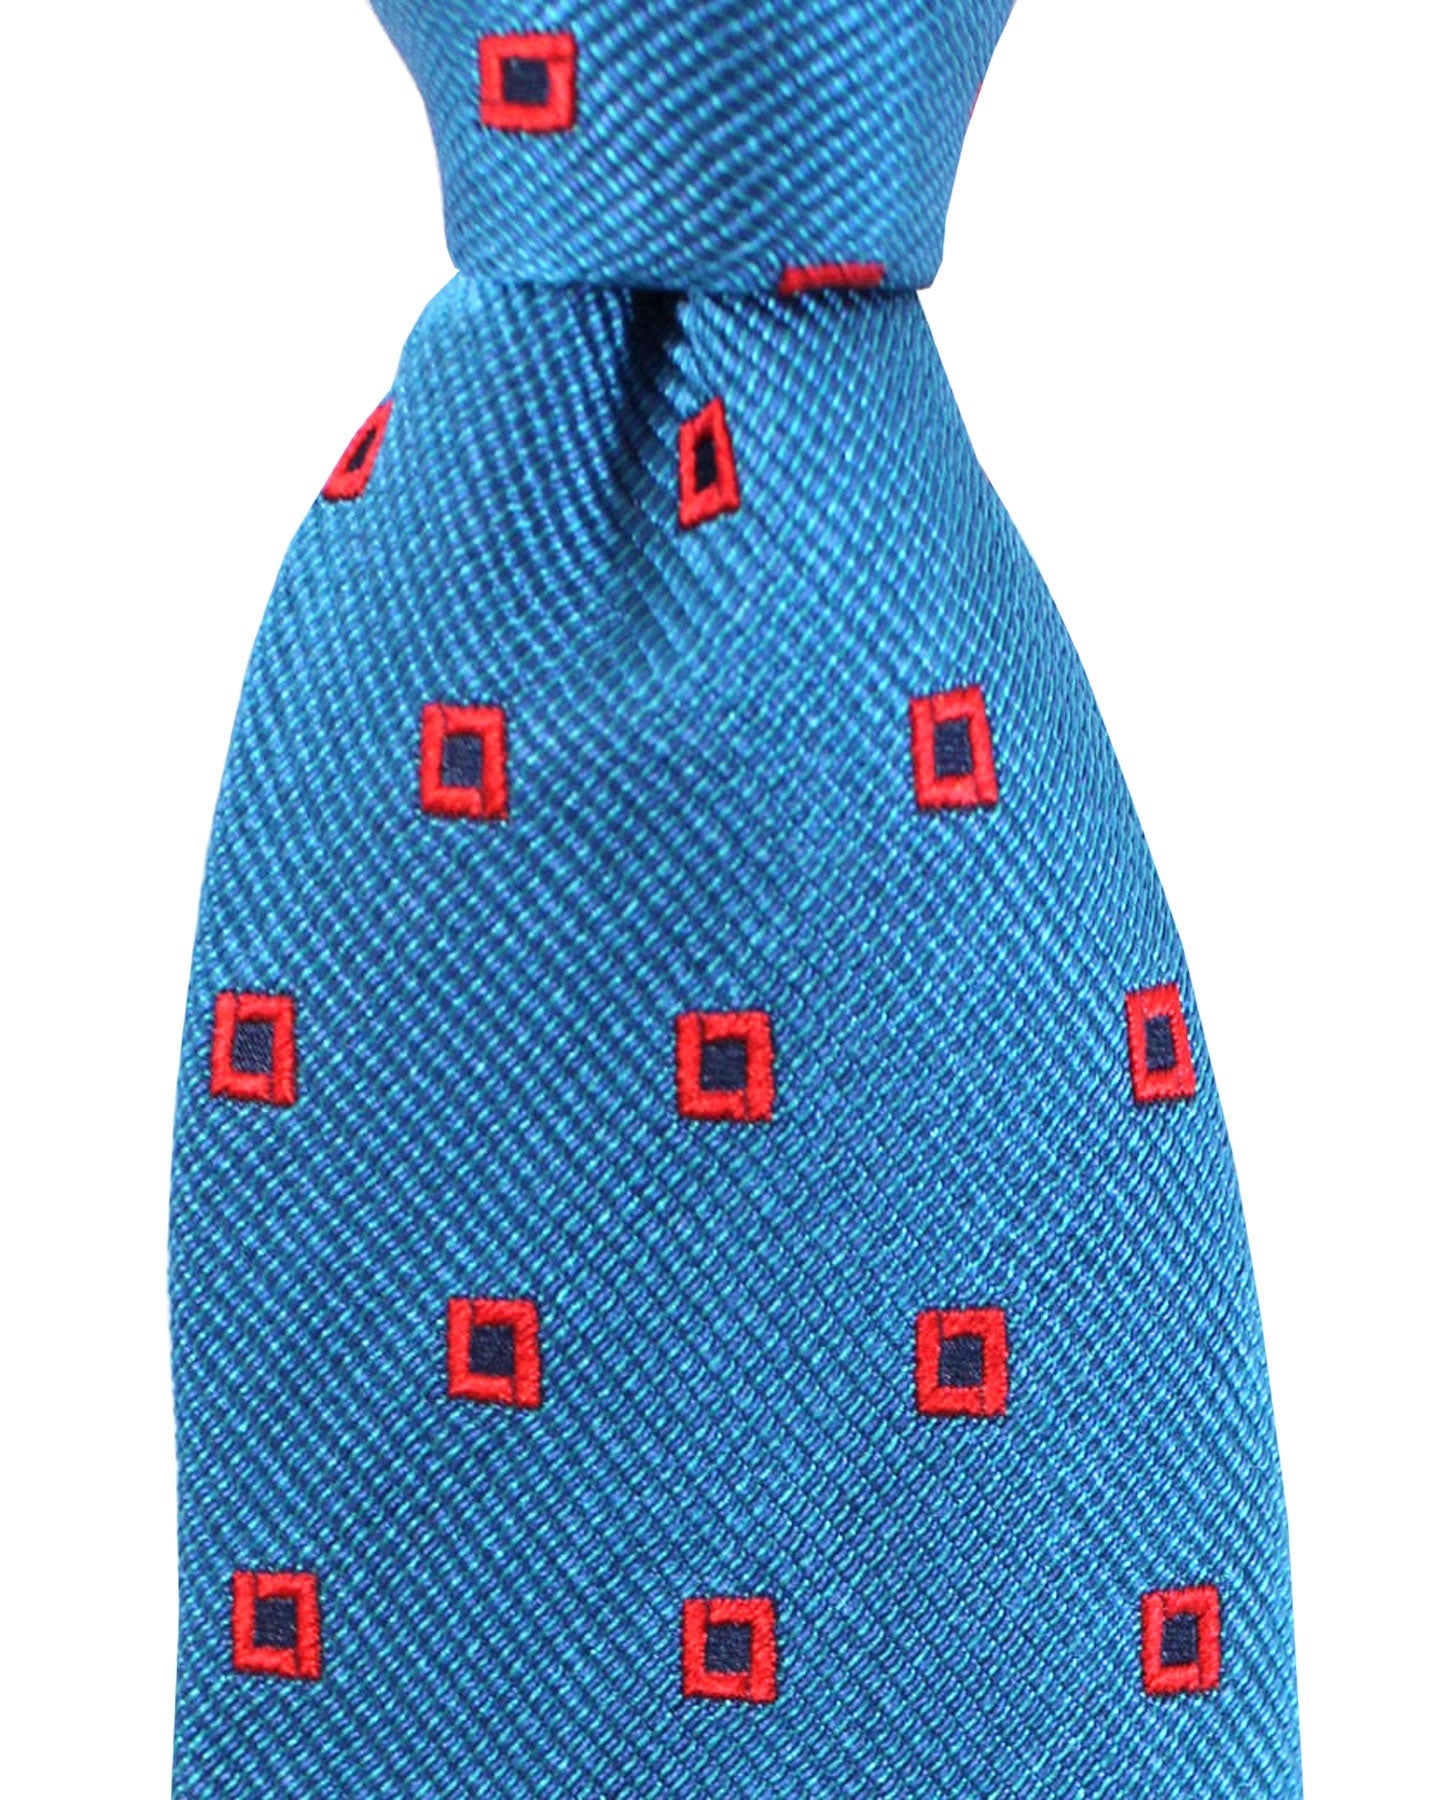 Massimo Valeri 11 Fold Tie Teal Red Squares - Elevenfold Necktie